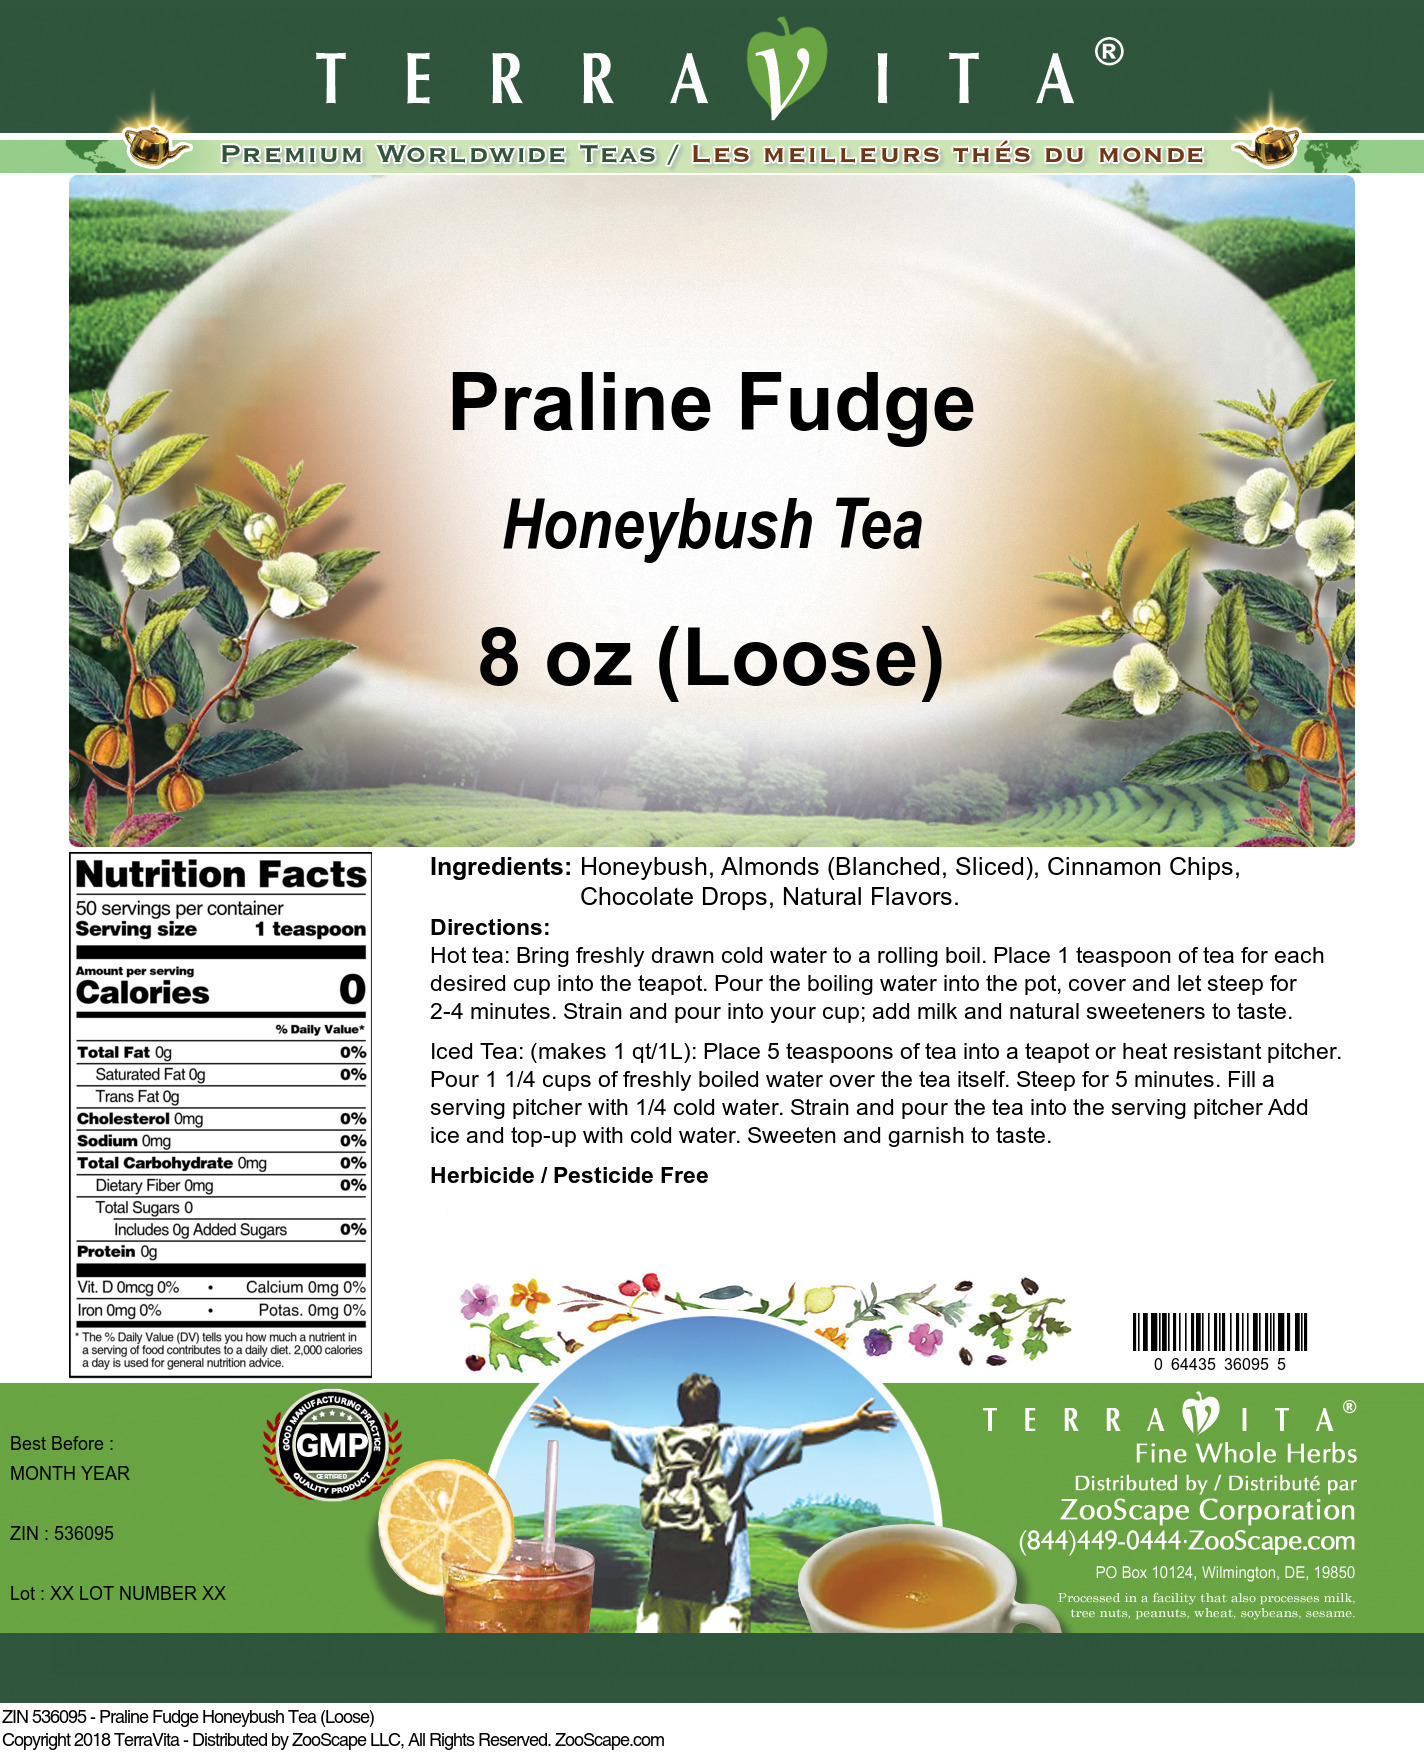 Praline Fudge Honeybush Tea (Loose) - Label